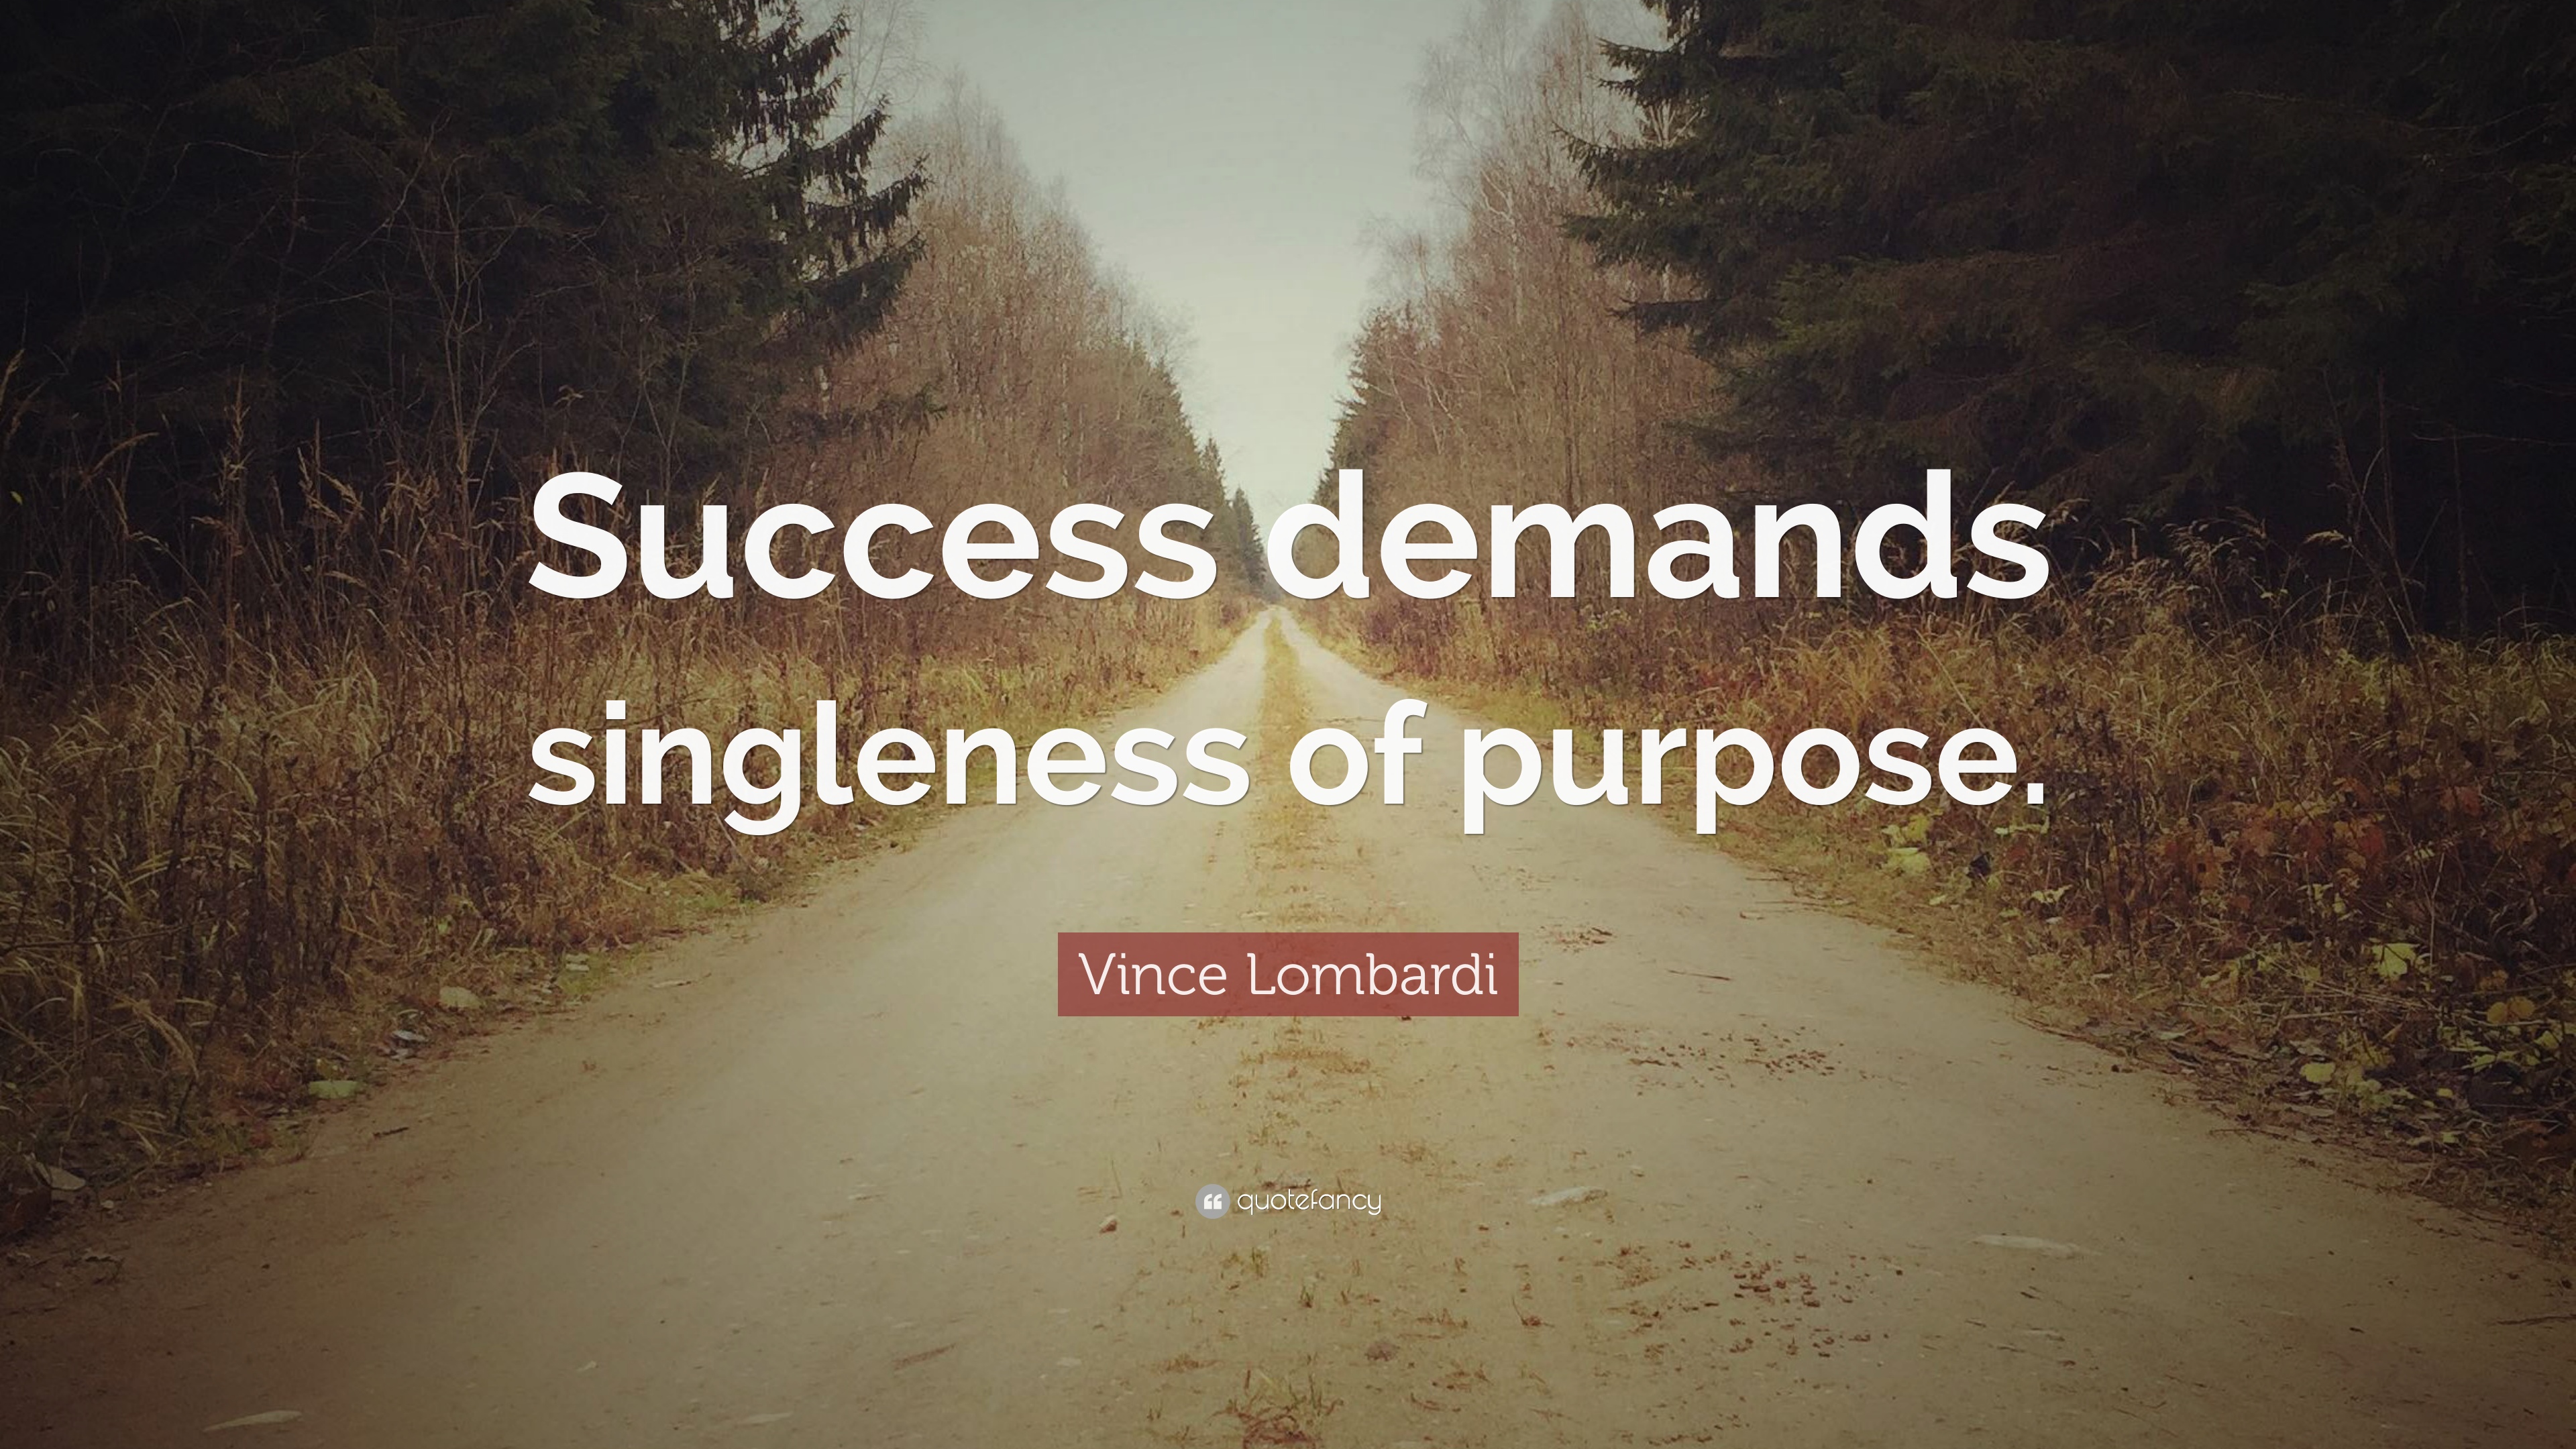 Vince Lombardi Quote: “Success demands singleness of purpose.” 12